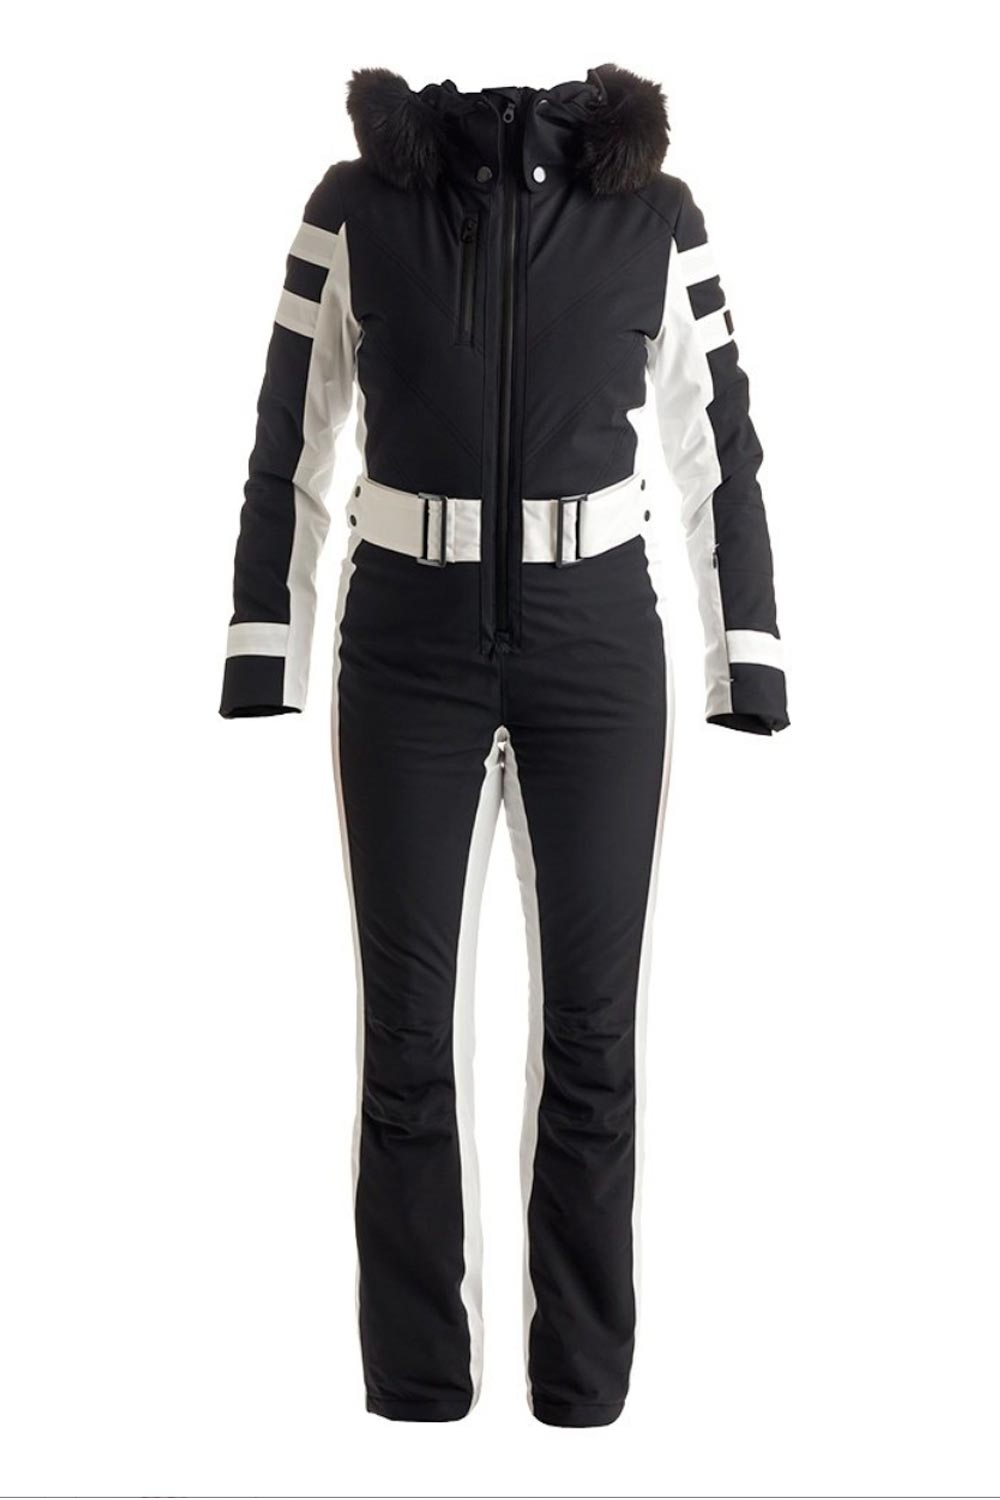 women's ski suit, black with white accents, faux fur hood